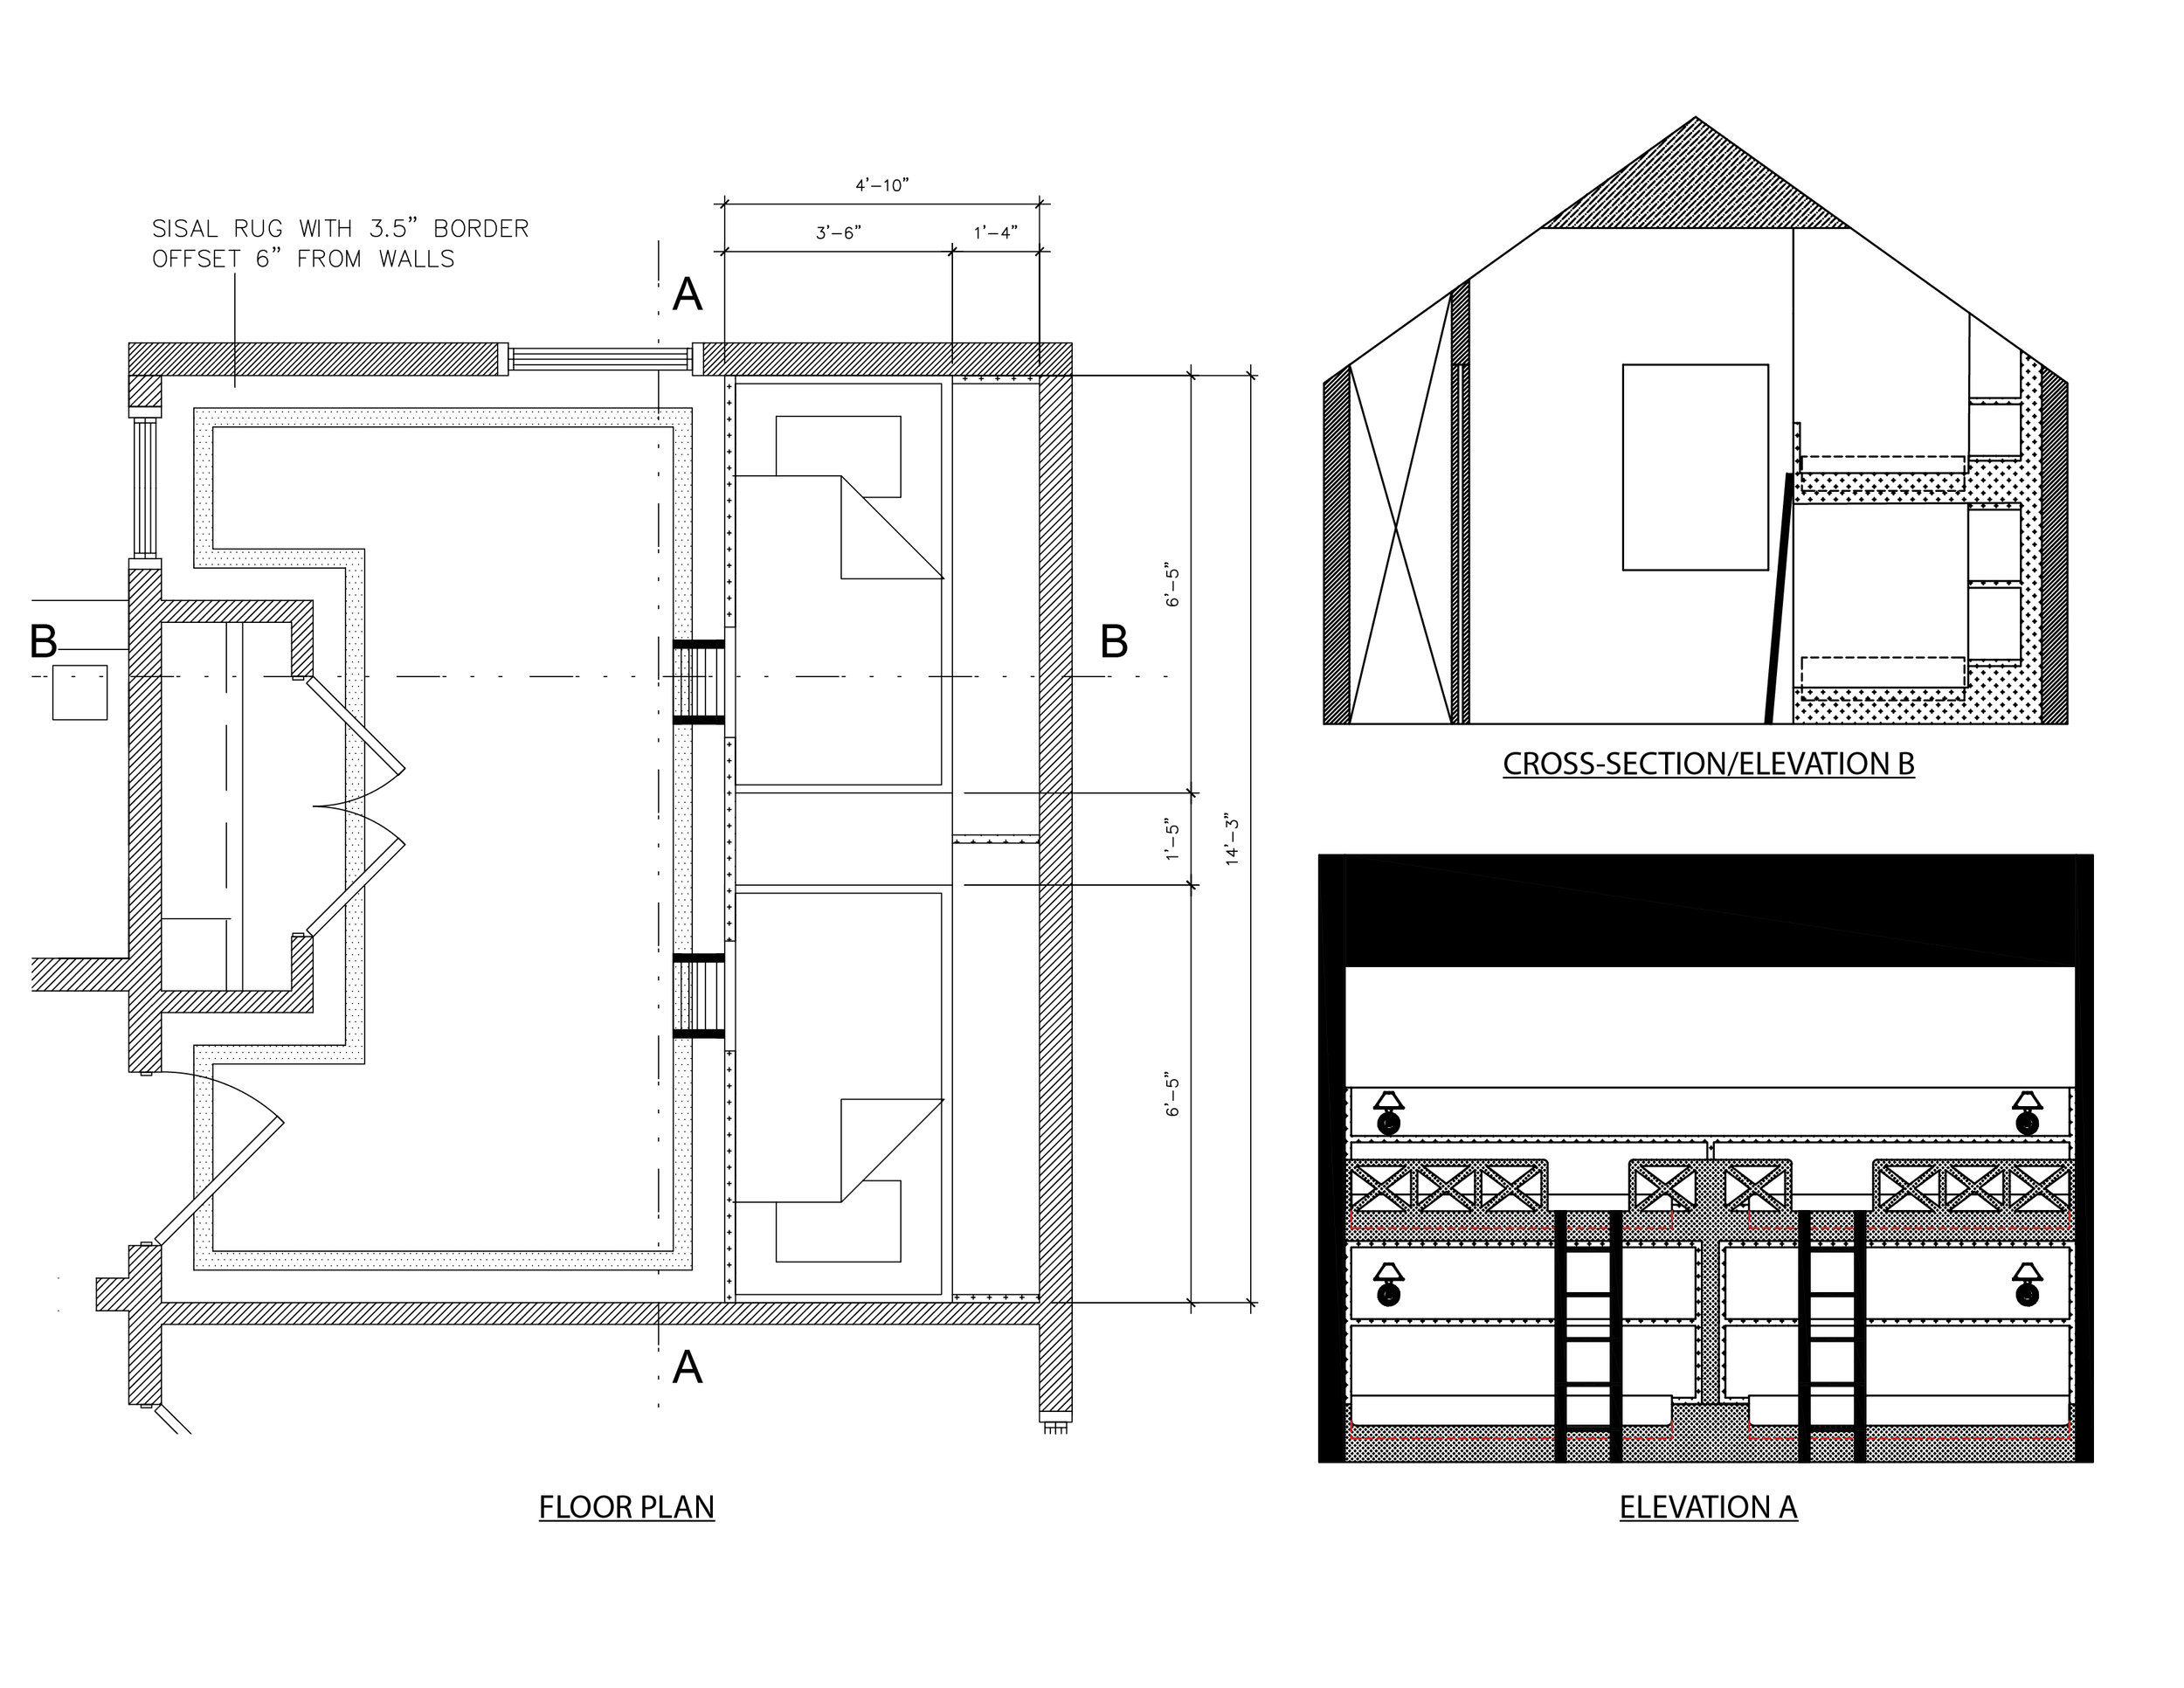 Boys' Room floor plan &amp; elevations